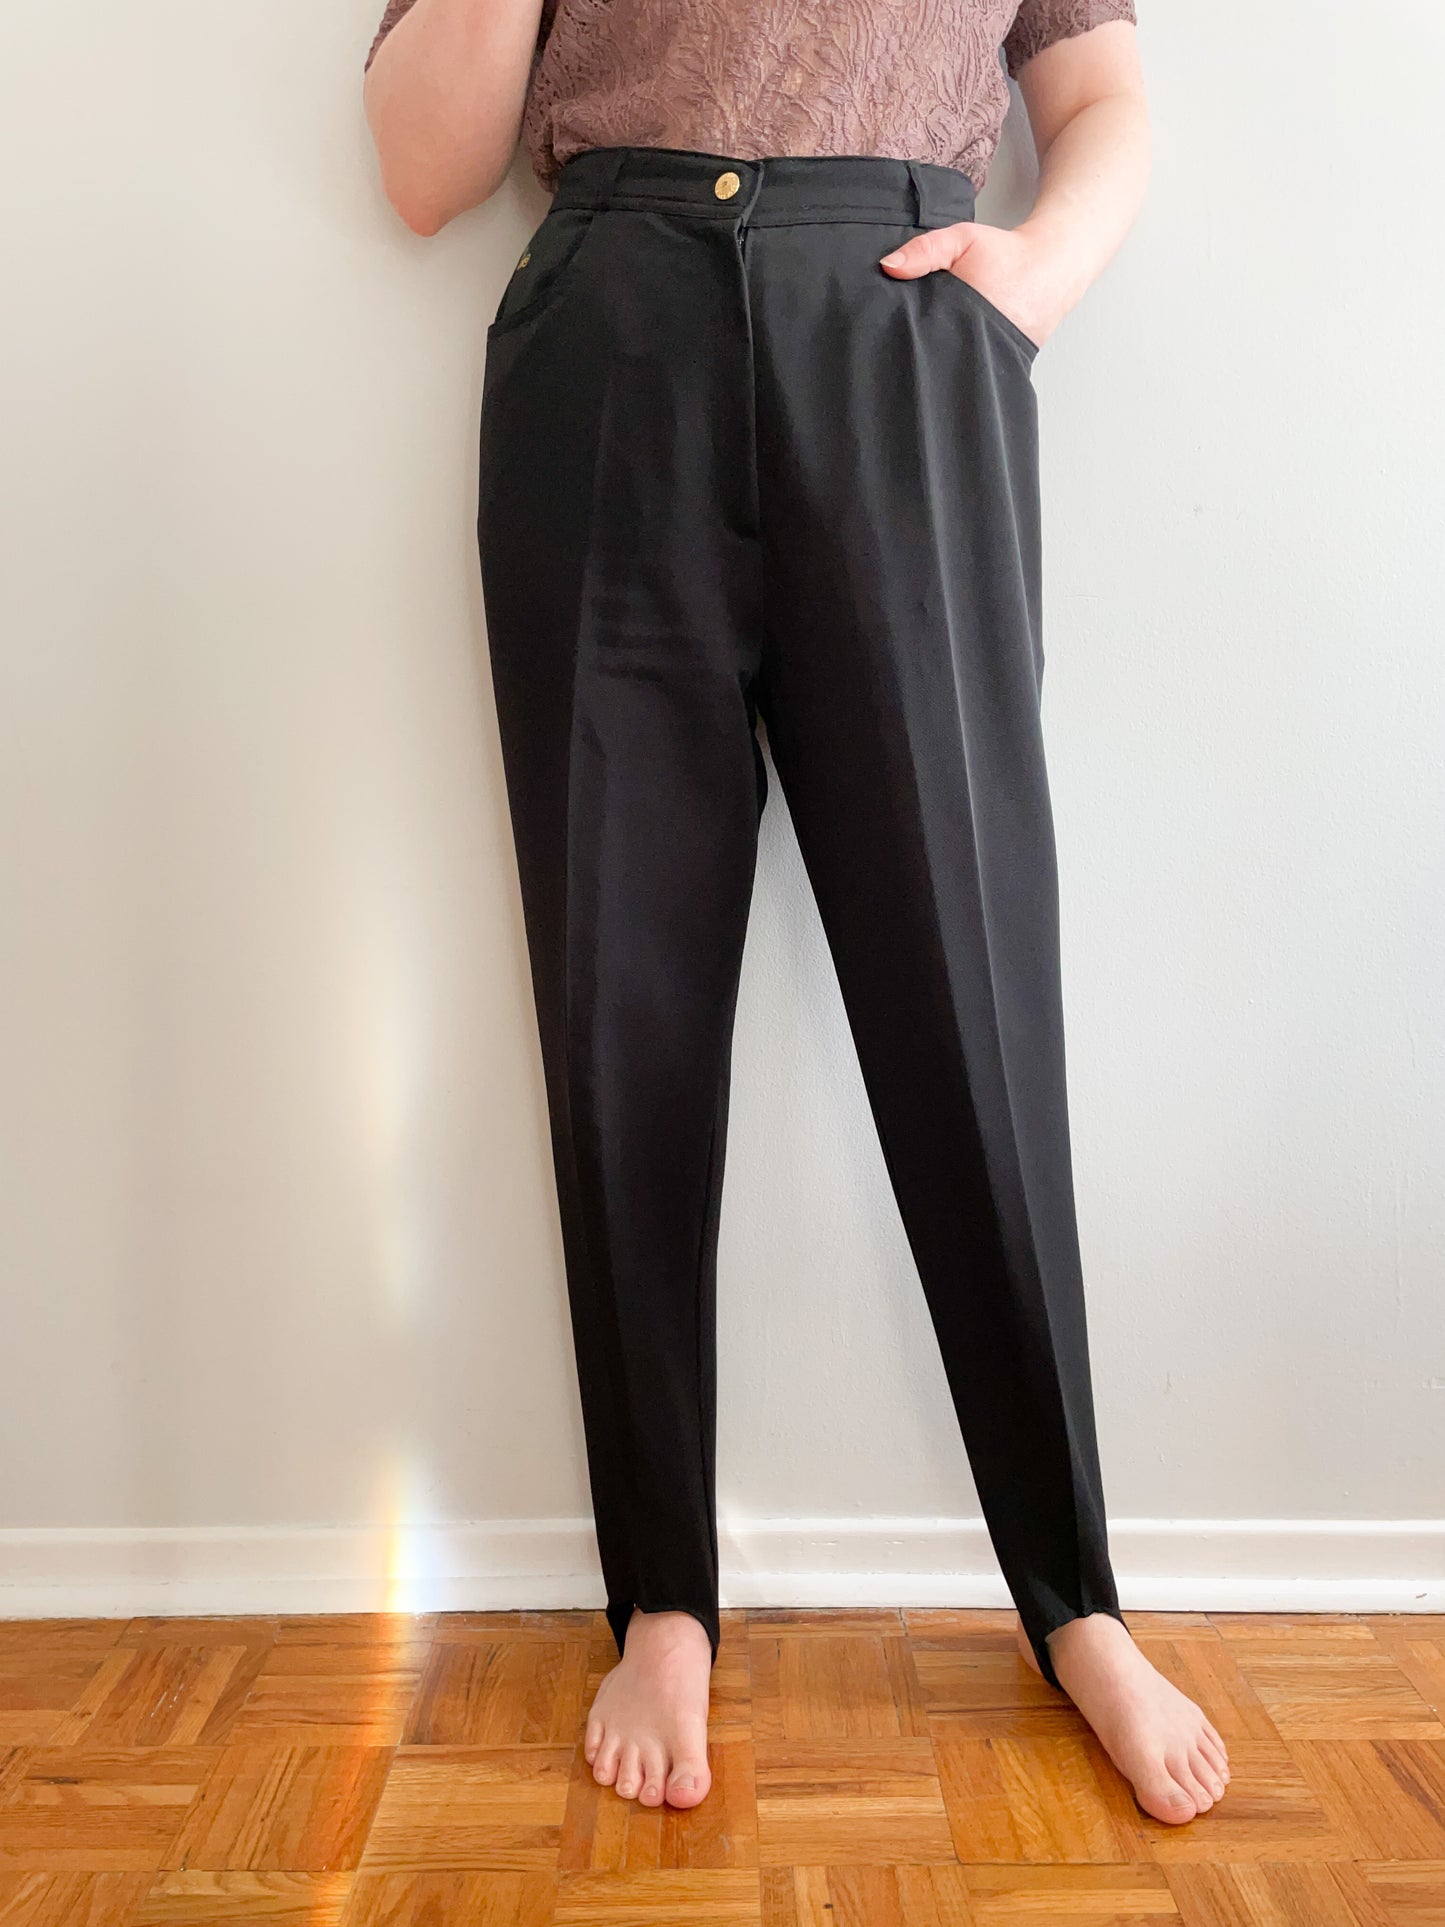 Tamsrum Black High Rise Trouser Stirrup Pants - S/M